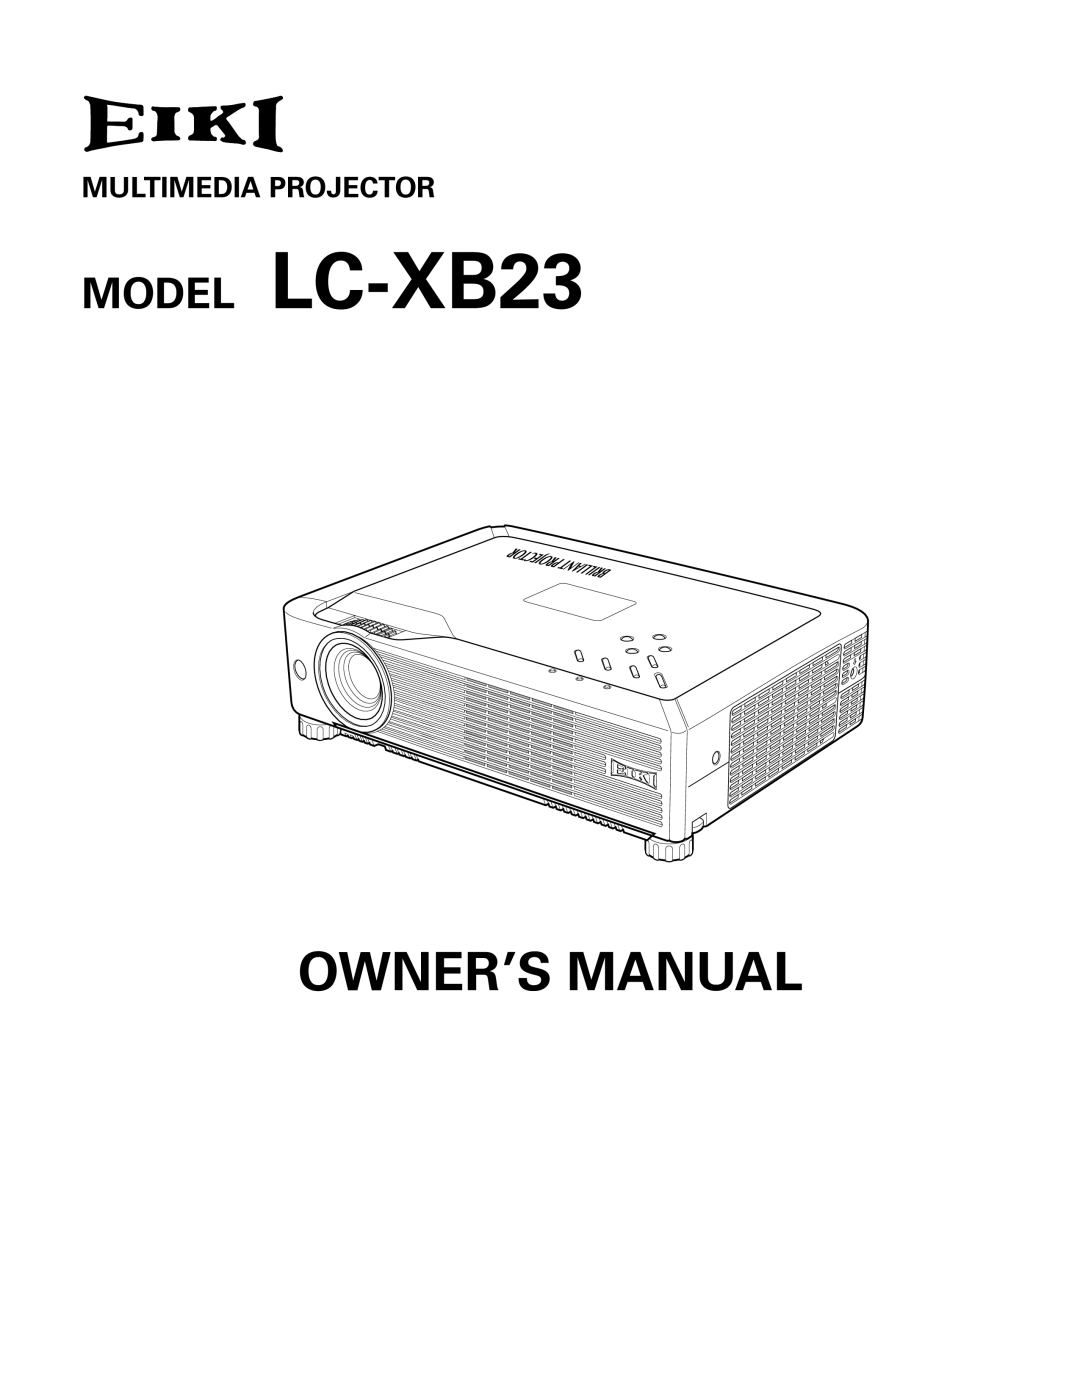 Eiki owner manual Multimedia Projector, MODEL LC-XB23 